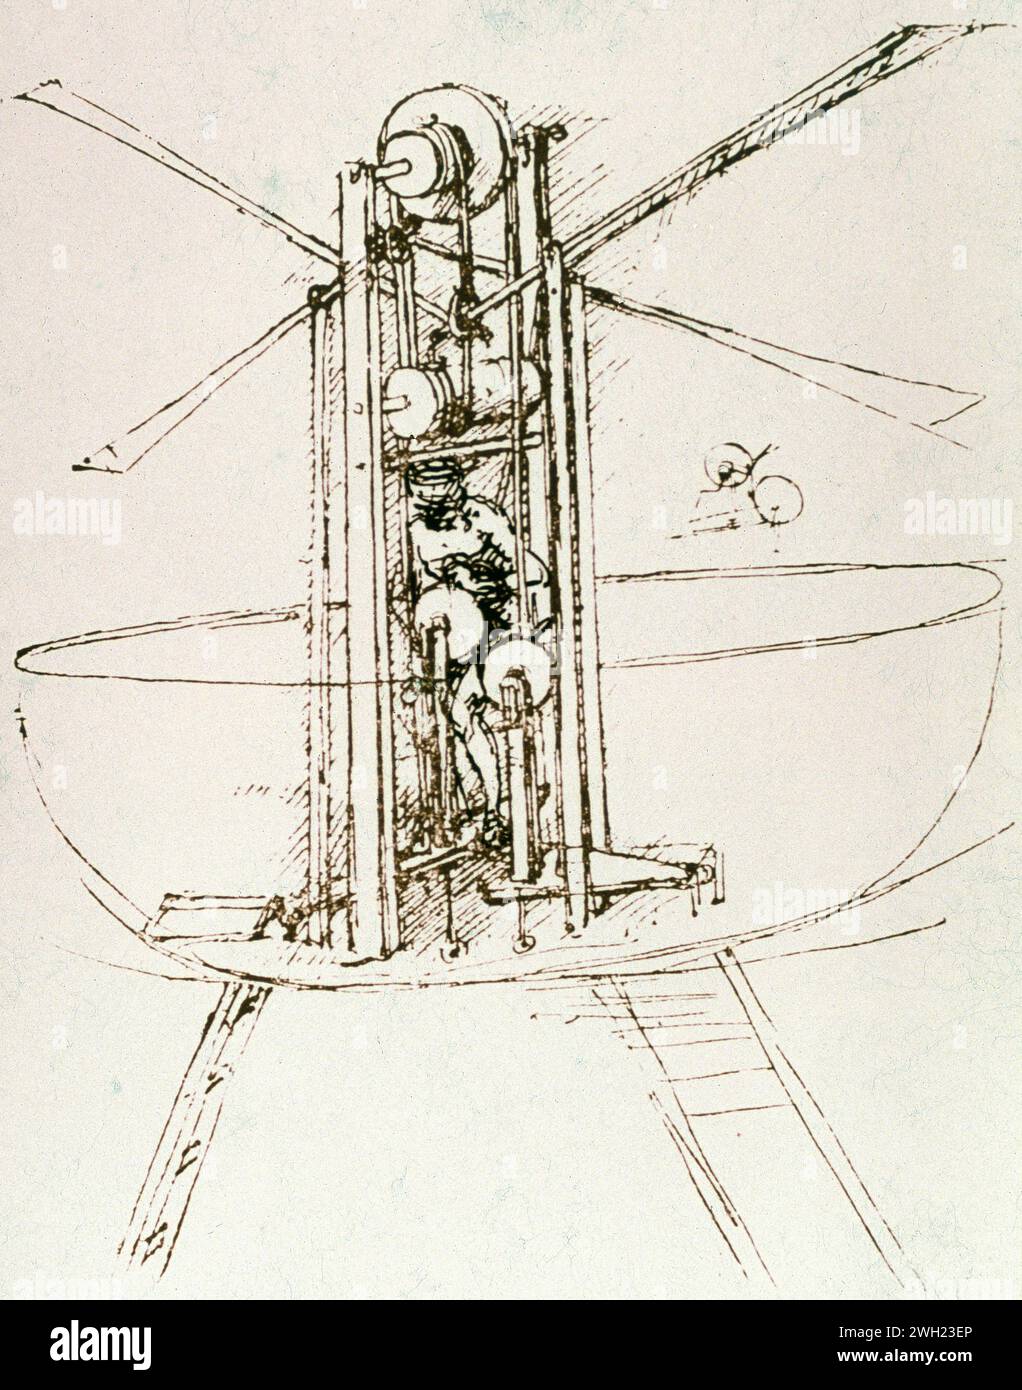 Flapping wing machine, drawings by Italian artist Leonardo da Vinci, Italy 1400s Stock Photo